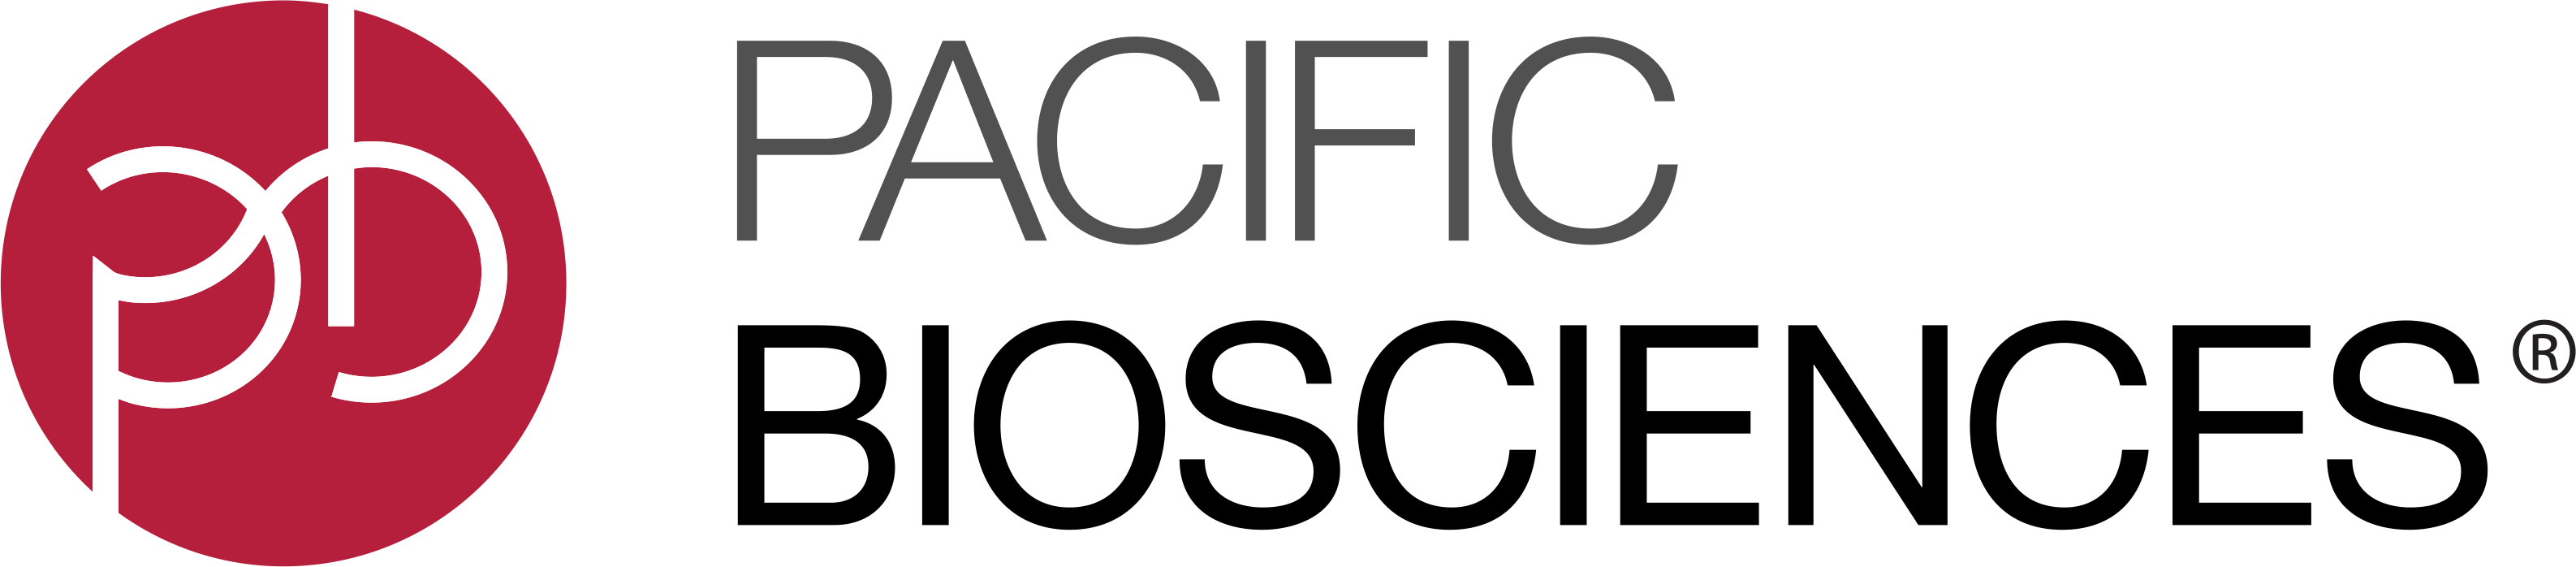 Logo Pacbio